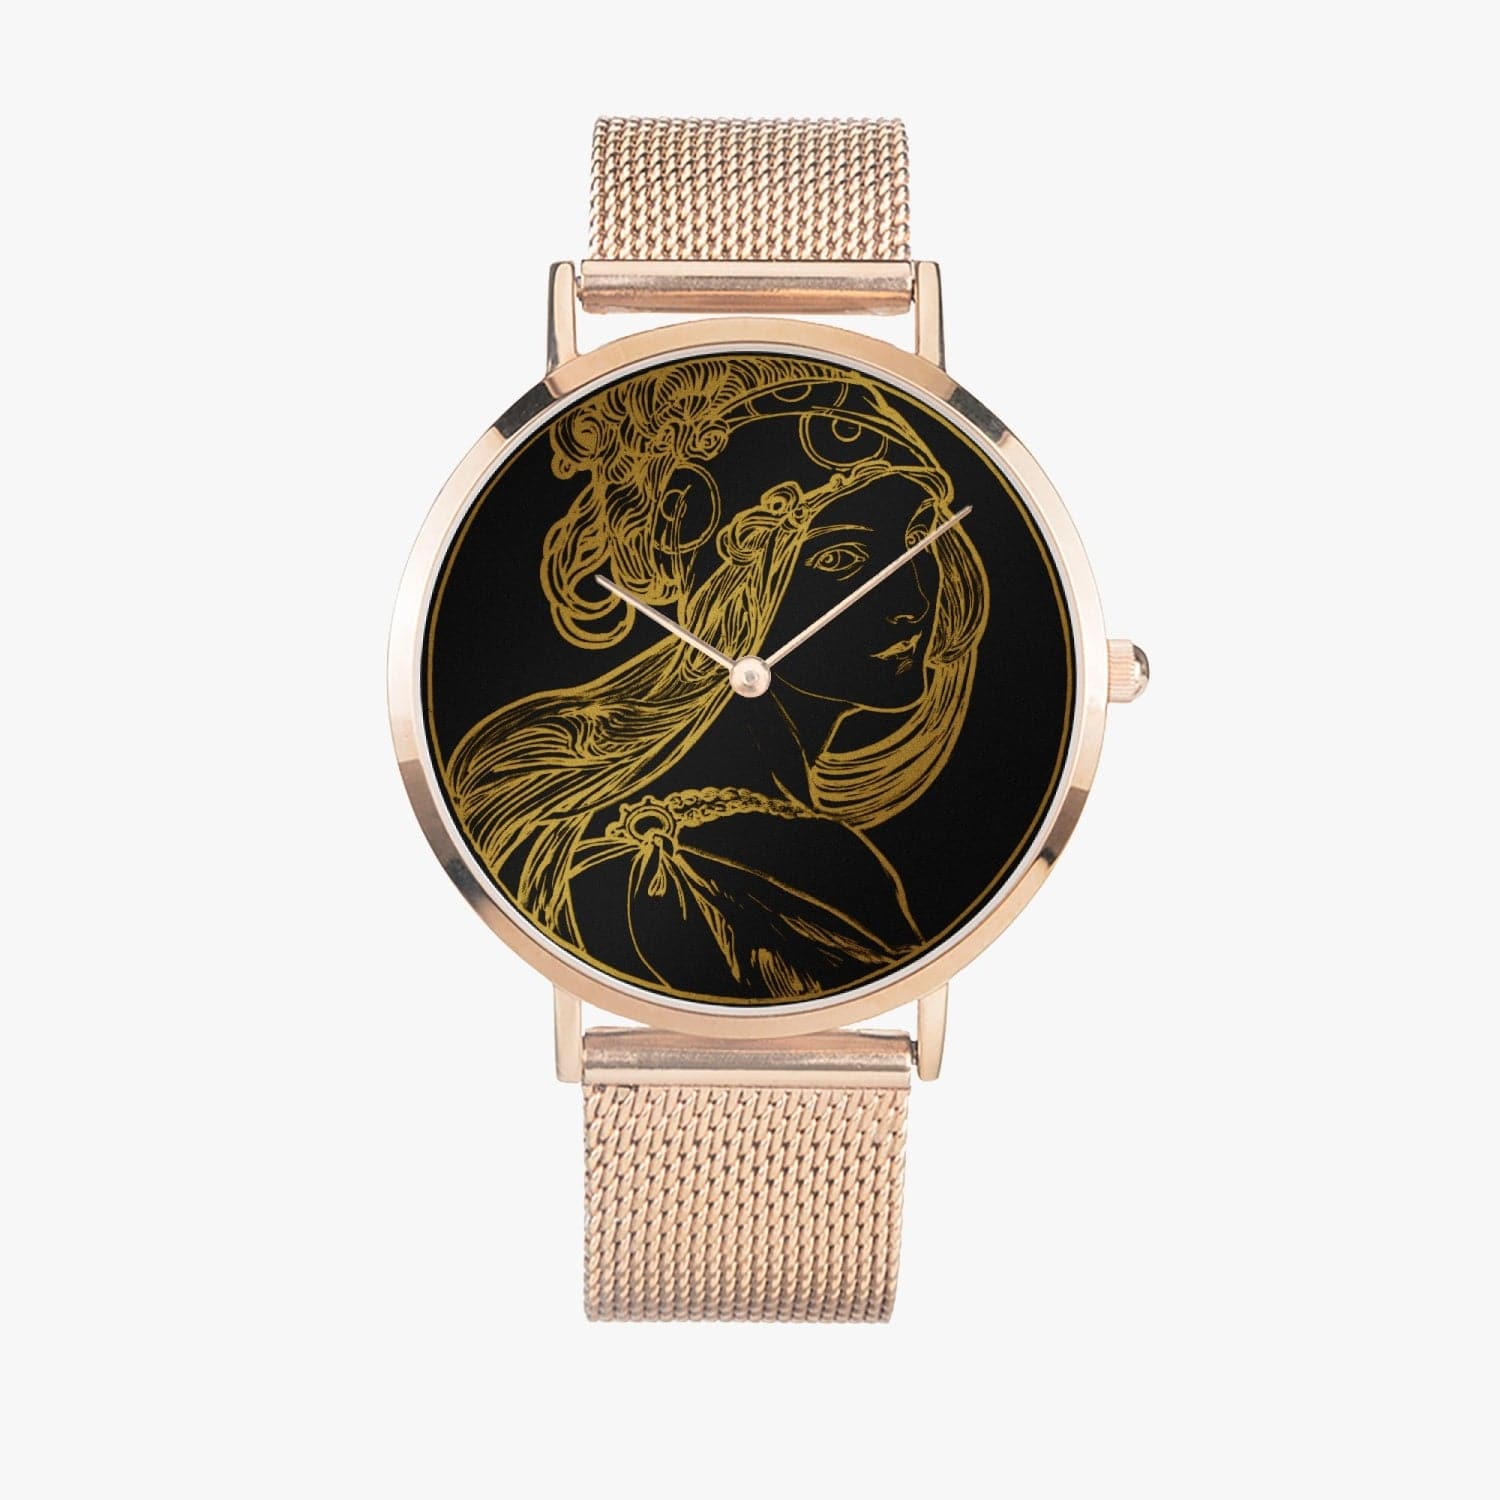 Art Nouveau Watch Design golden Lady, Fashion Ultra-thin Stainless Steel Quartz Watch, by Sensus Studio